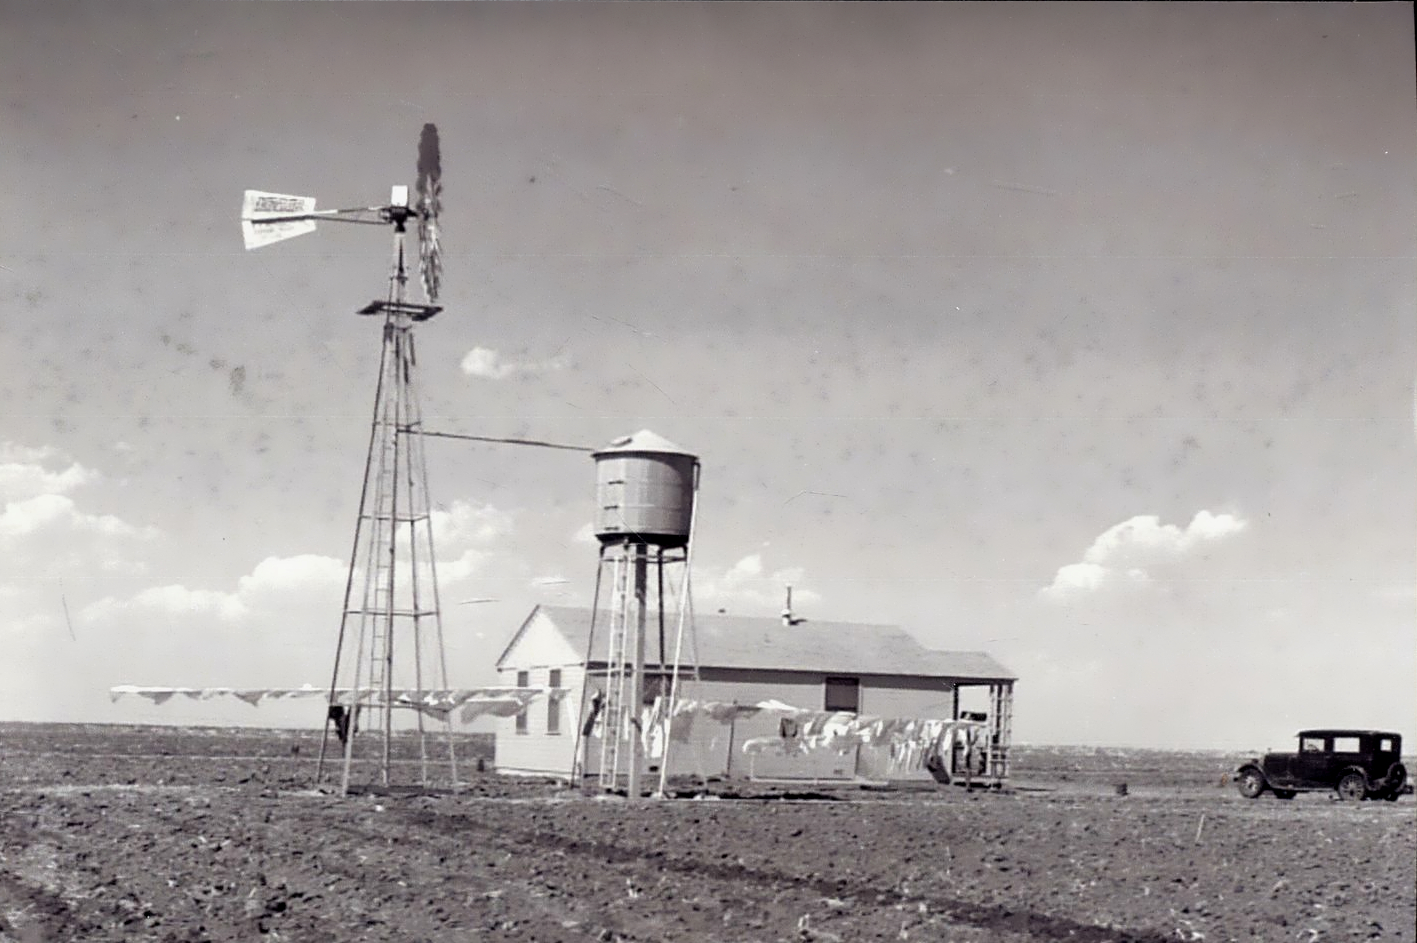 Ropesville Farm in 1936